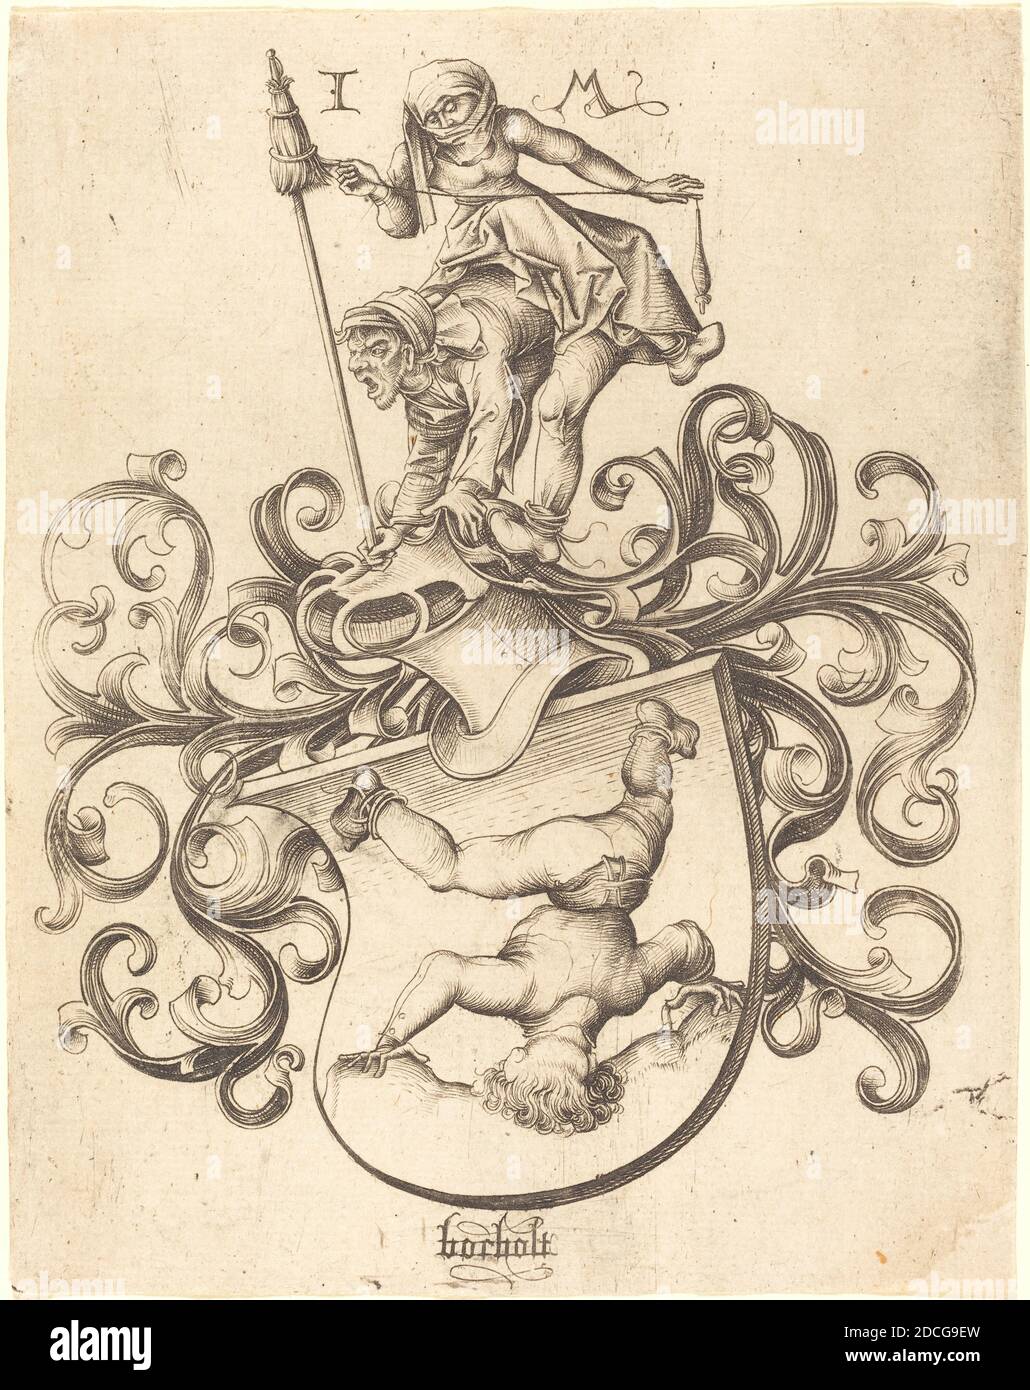 Israhel van Meckenem, (artist), German, c. 1445 - 1503, Master of the Housebook, (artist after), German, active c. 1470 - 1500, Coat of Arms with Tumbling Boy, c. 1480/1490, engraving Stock Photo